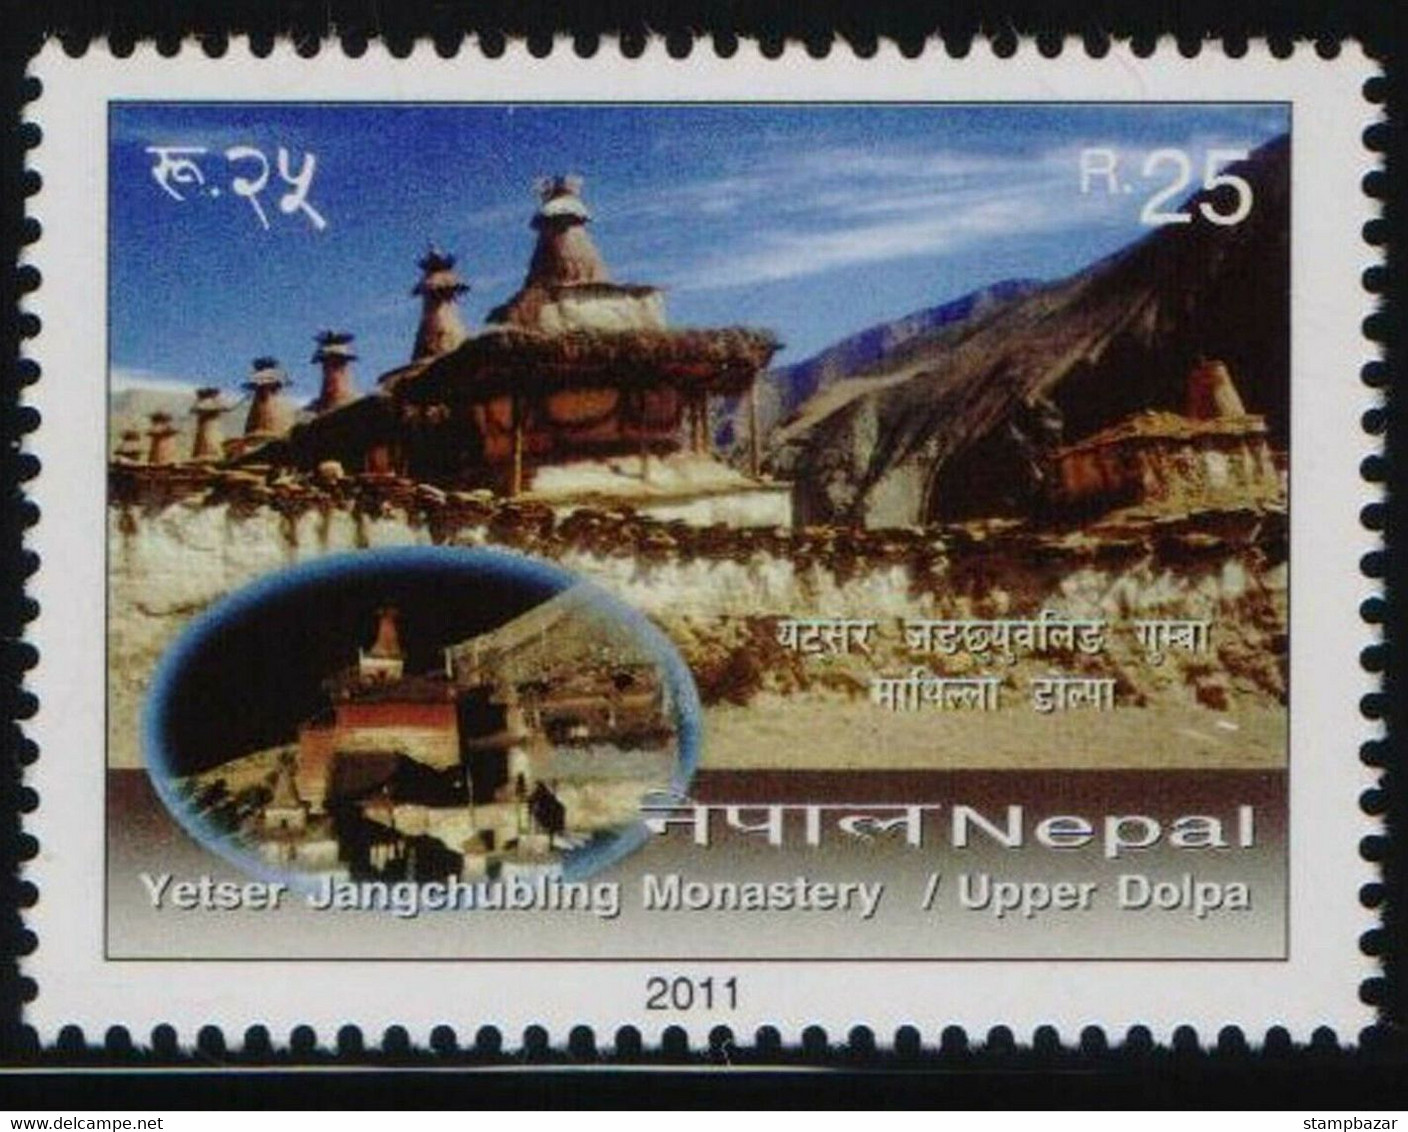 Nepal 2011 Yetser Jangchubling Monastery Upper Dolpa Stamp 1v MNH - Népal